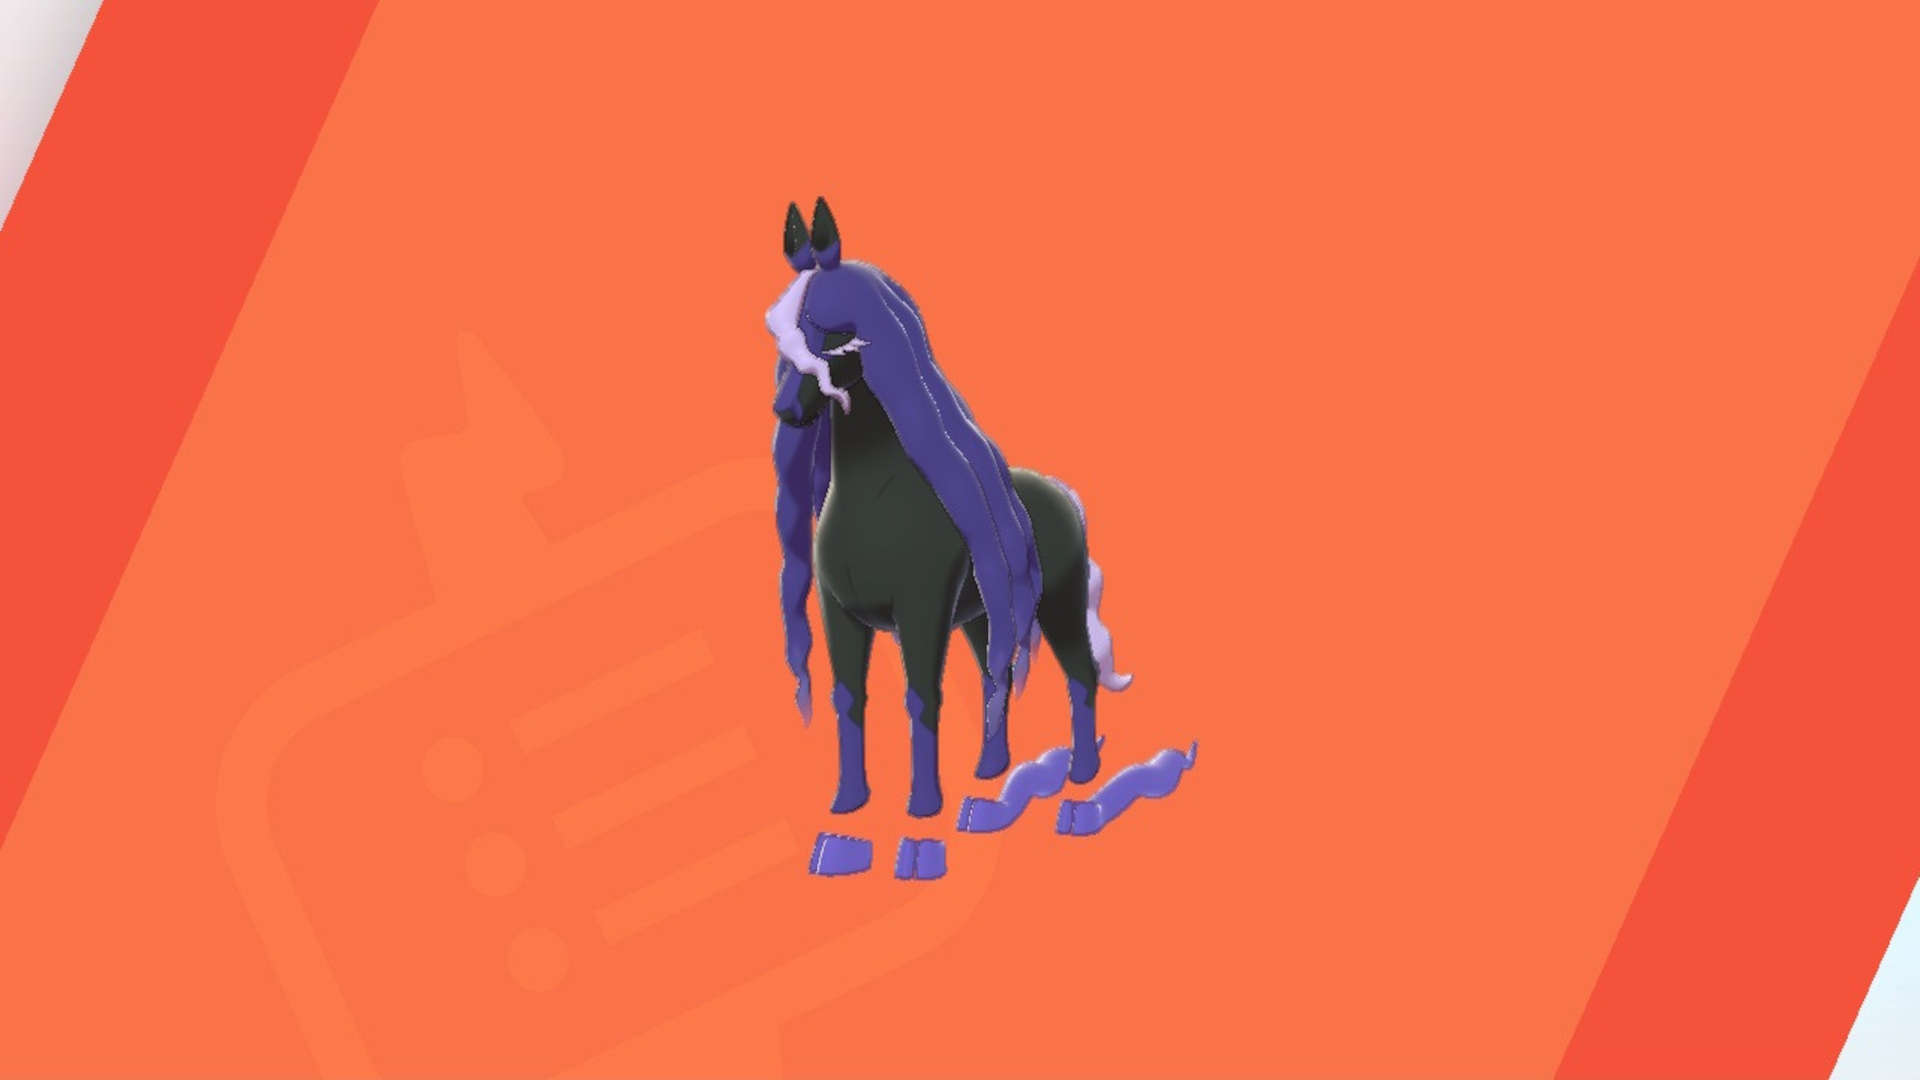 Pokémon Sword and Shield legendary Pokémon: Spectrier, a purple and back horse, placed against an orange background.